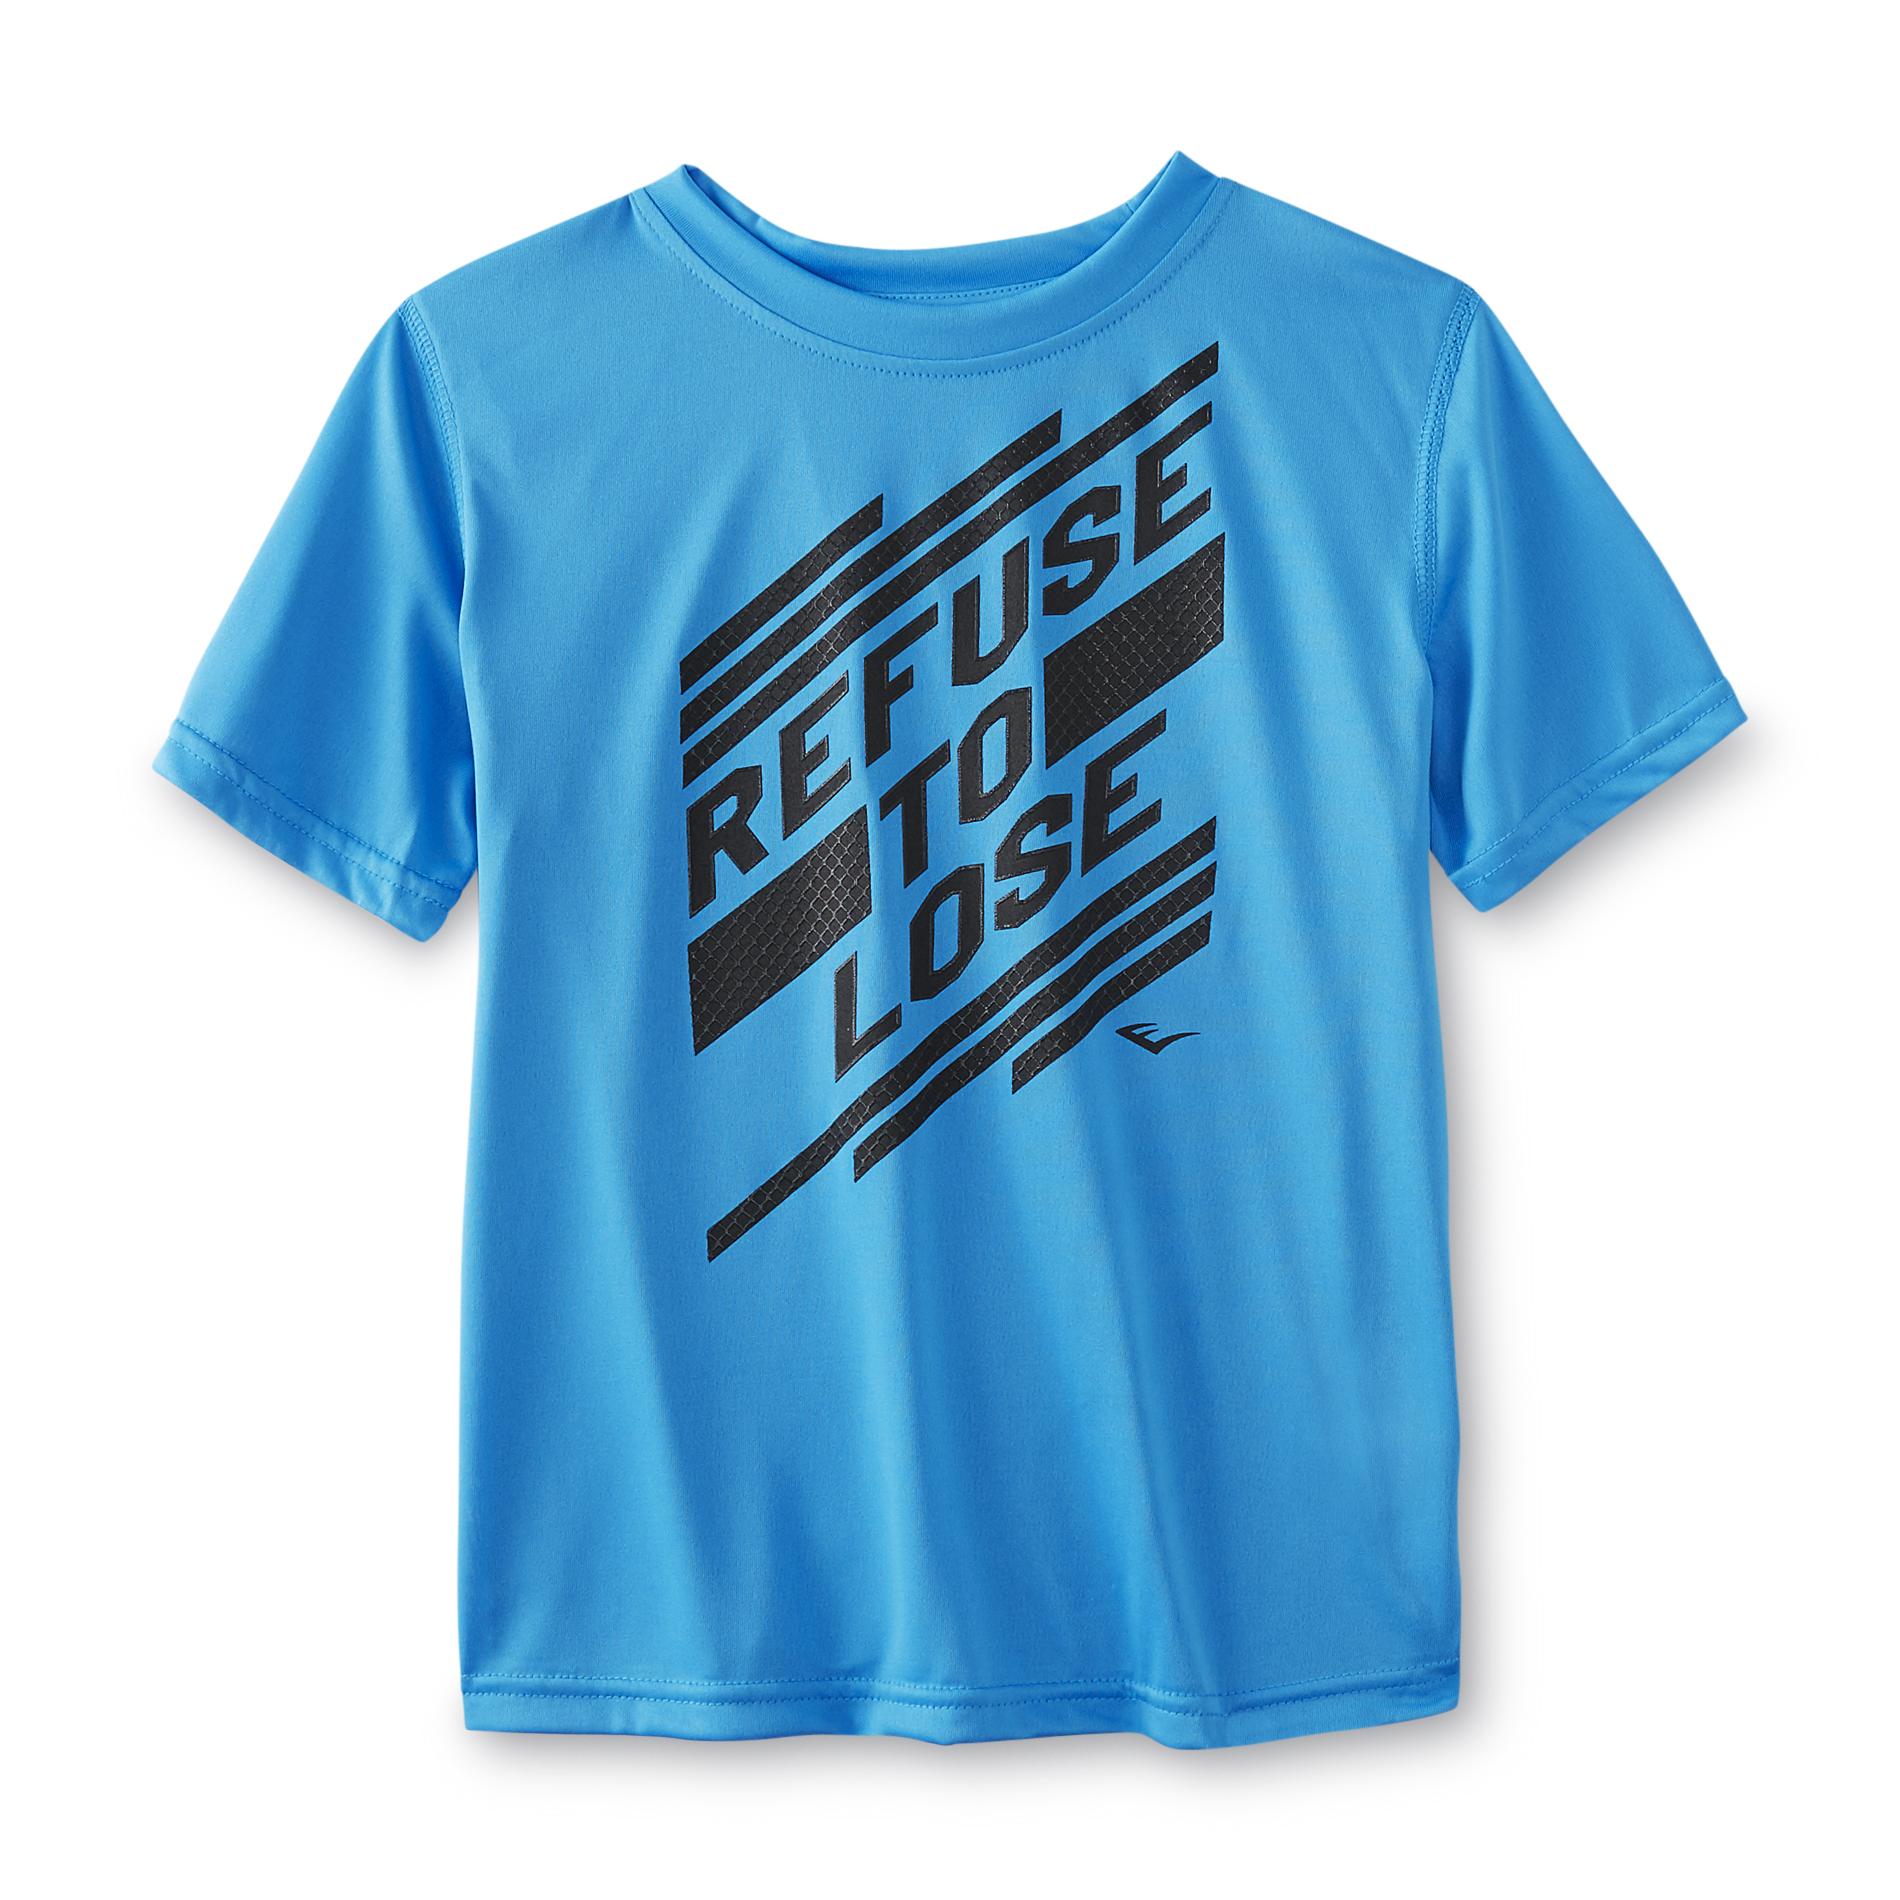 Everlast&reg; Boy's Athletic Shirt - Refuse To Lose